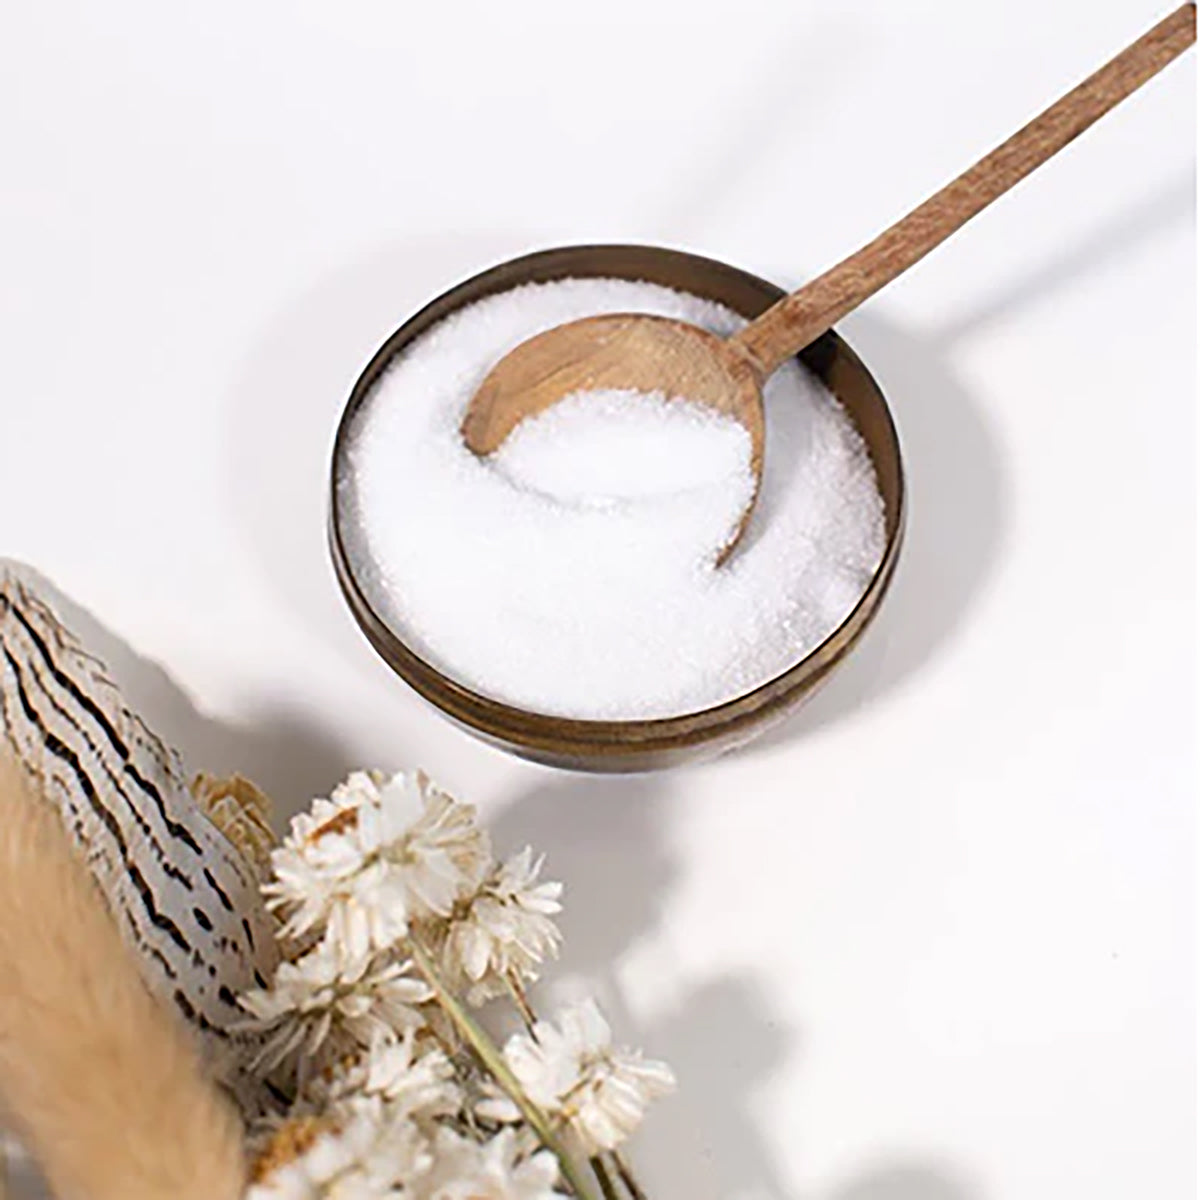 Inner Eye Bath Soak - honey, frankincense, ylang ylang, and rose oil